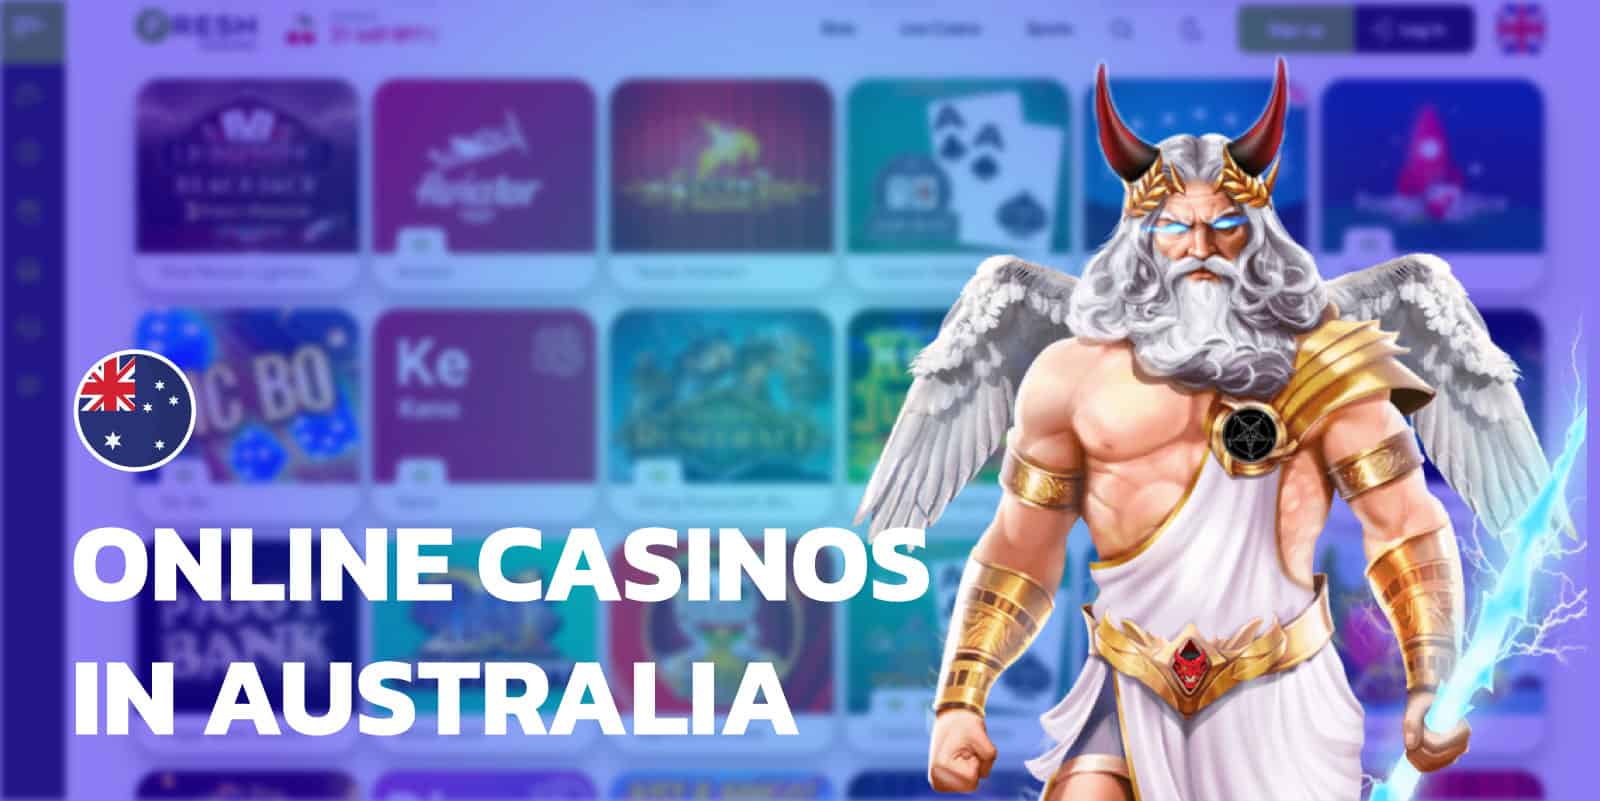 Online casinos Australia